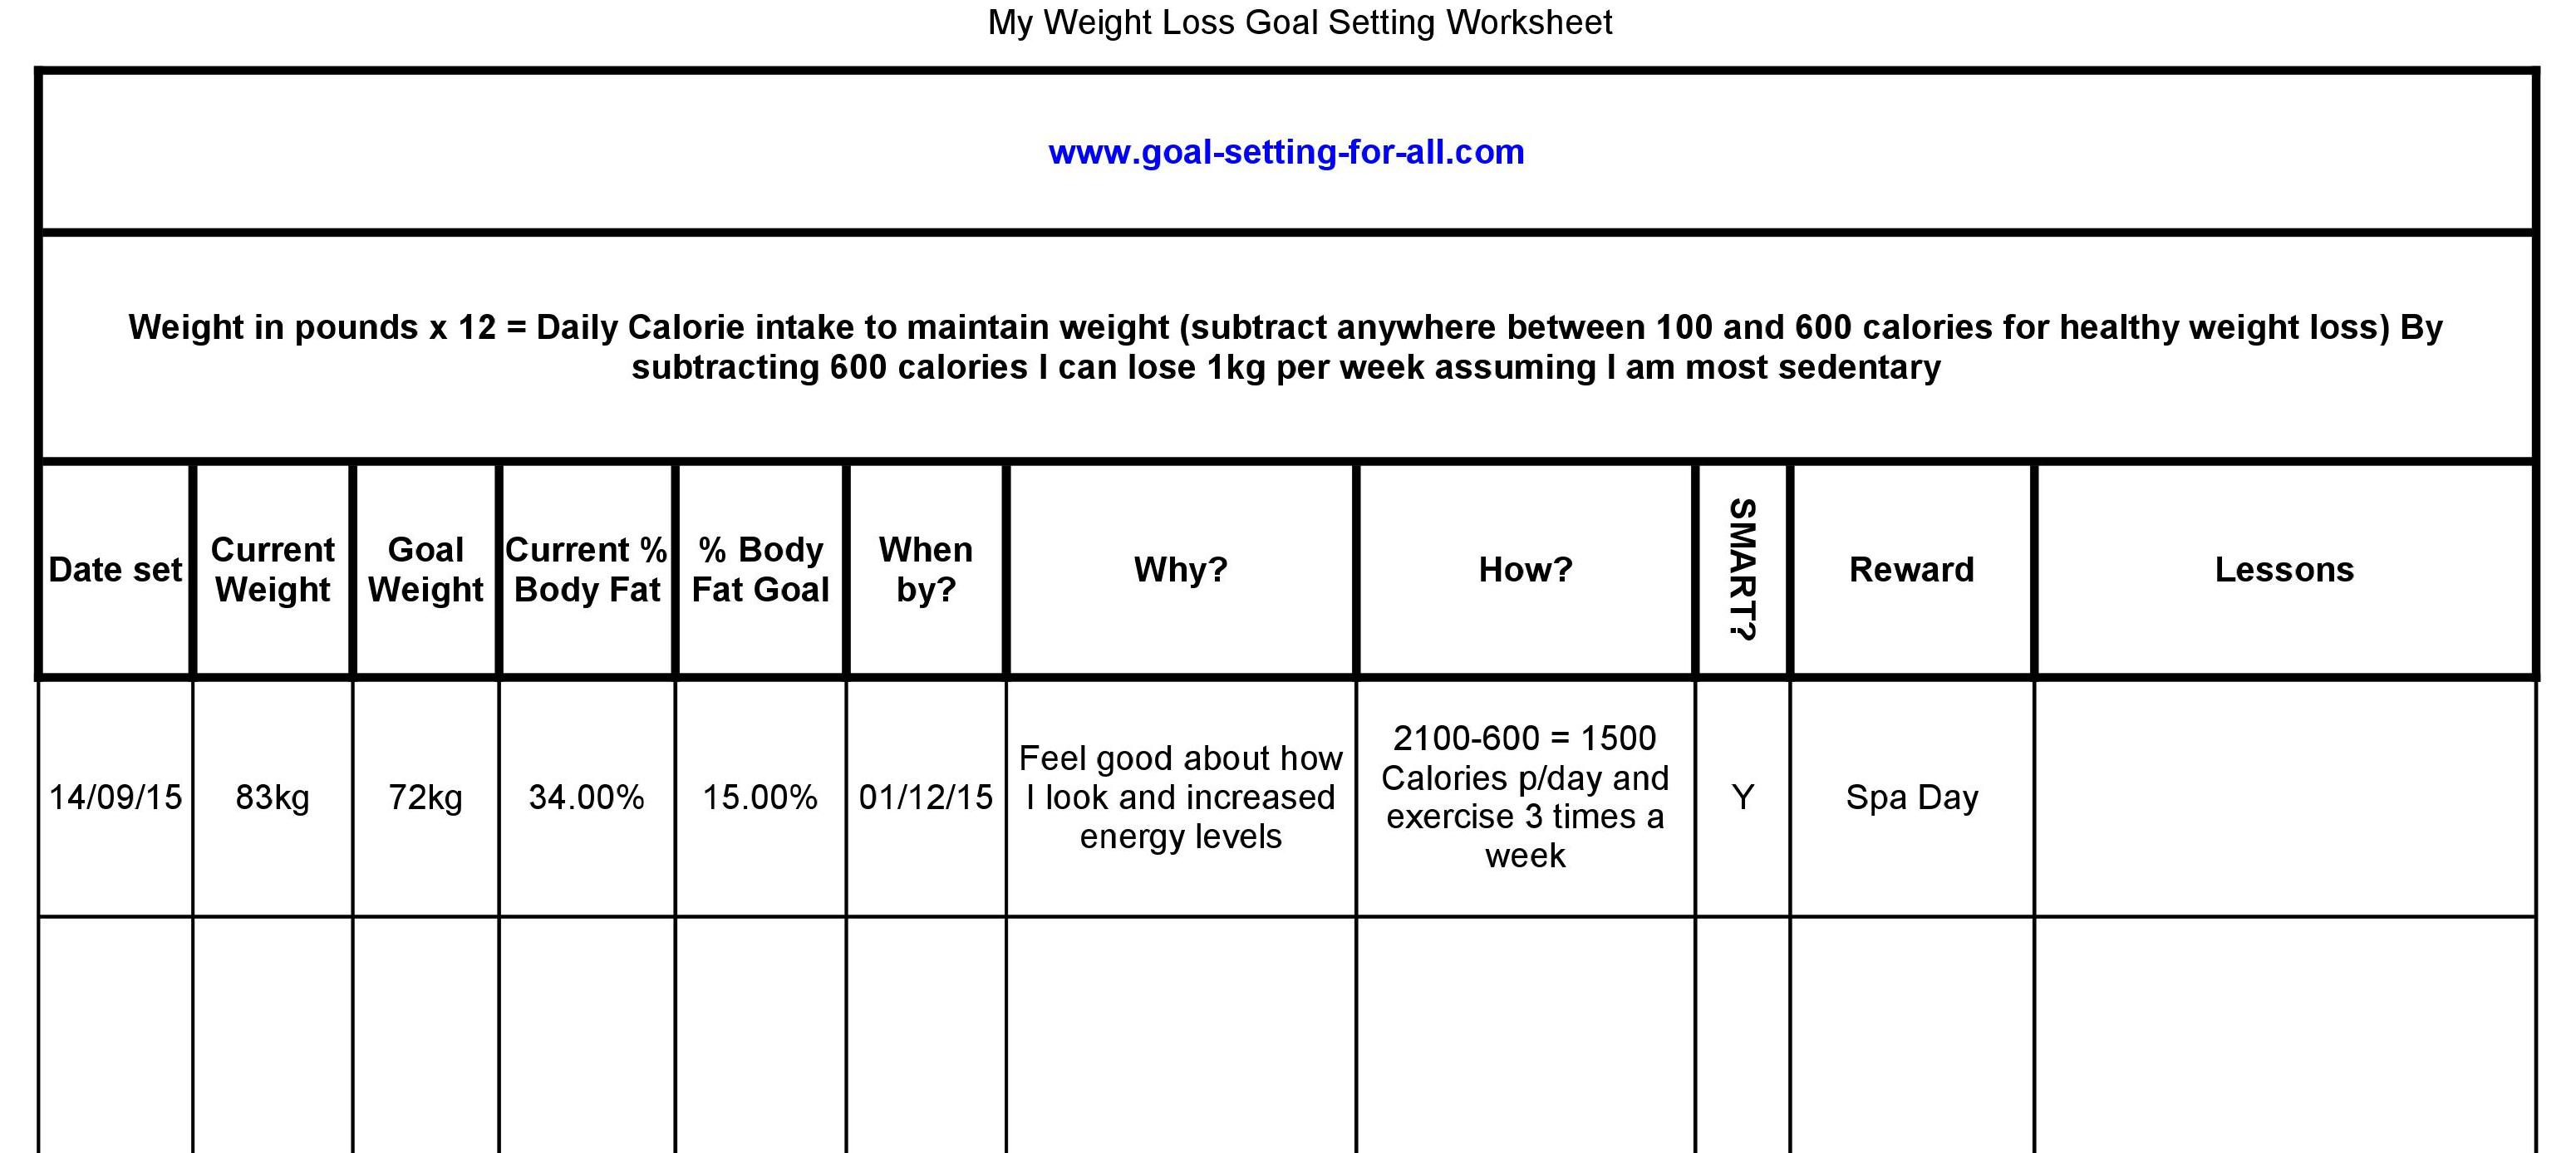 Weight loss goal setting worksheet